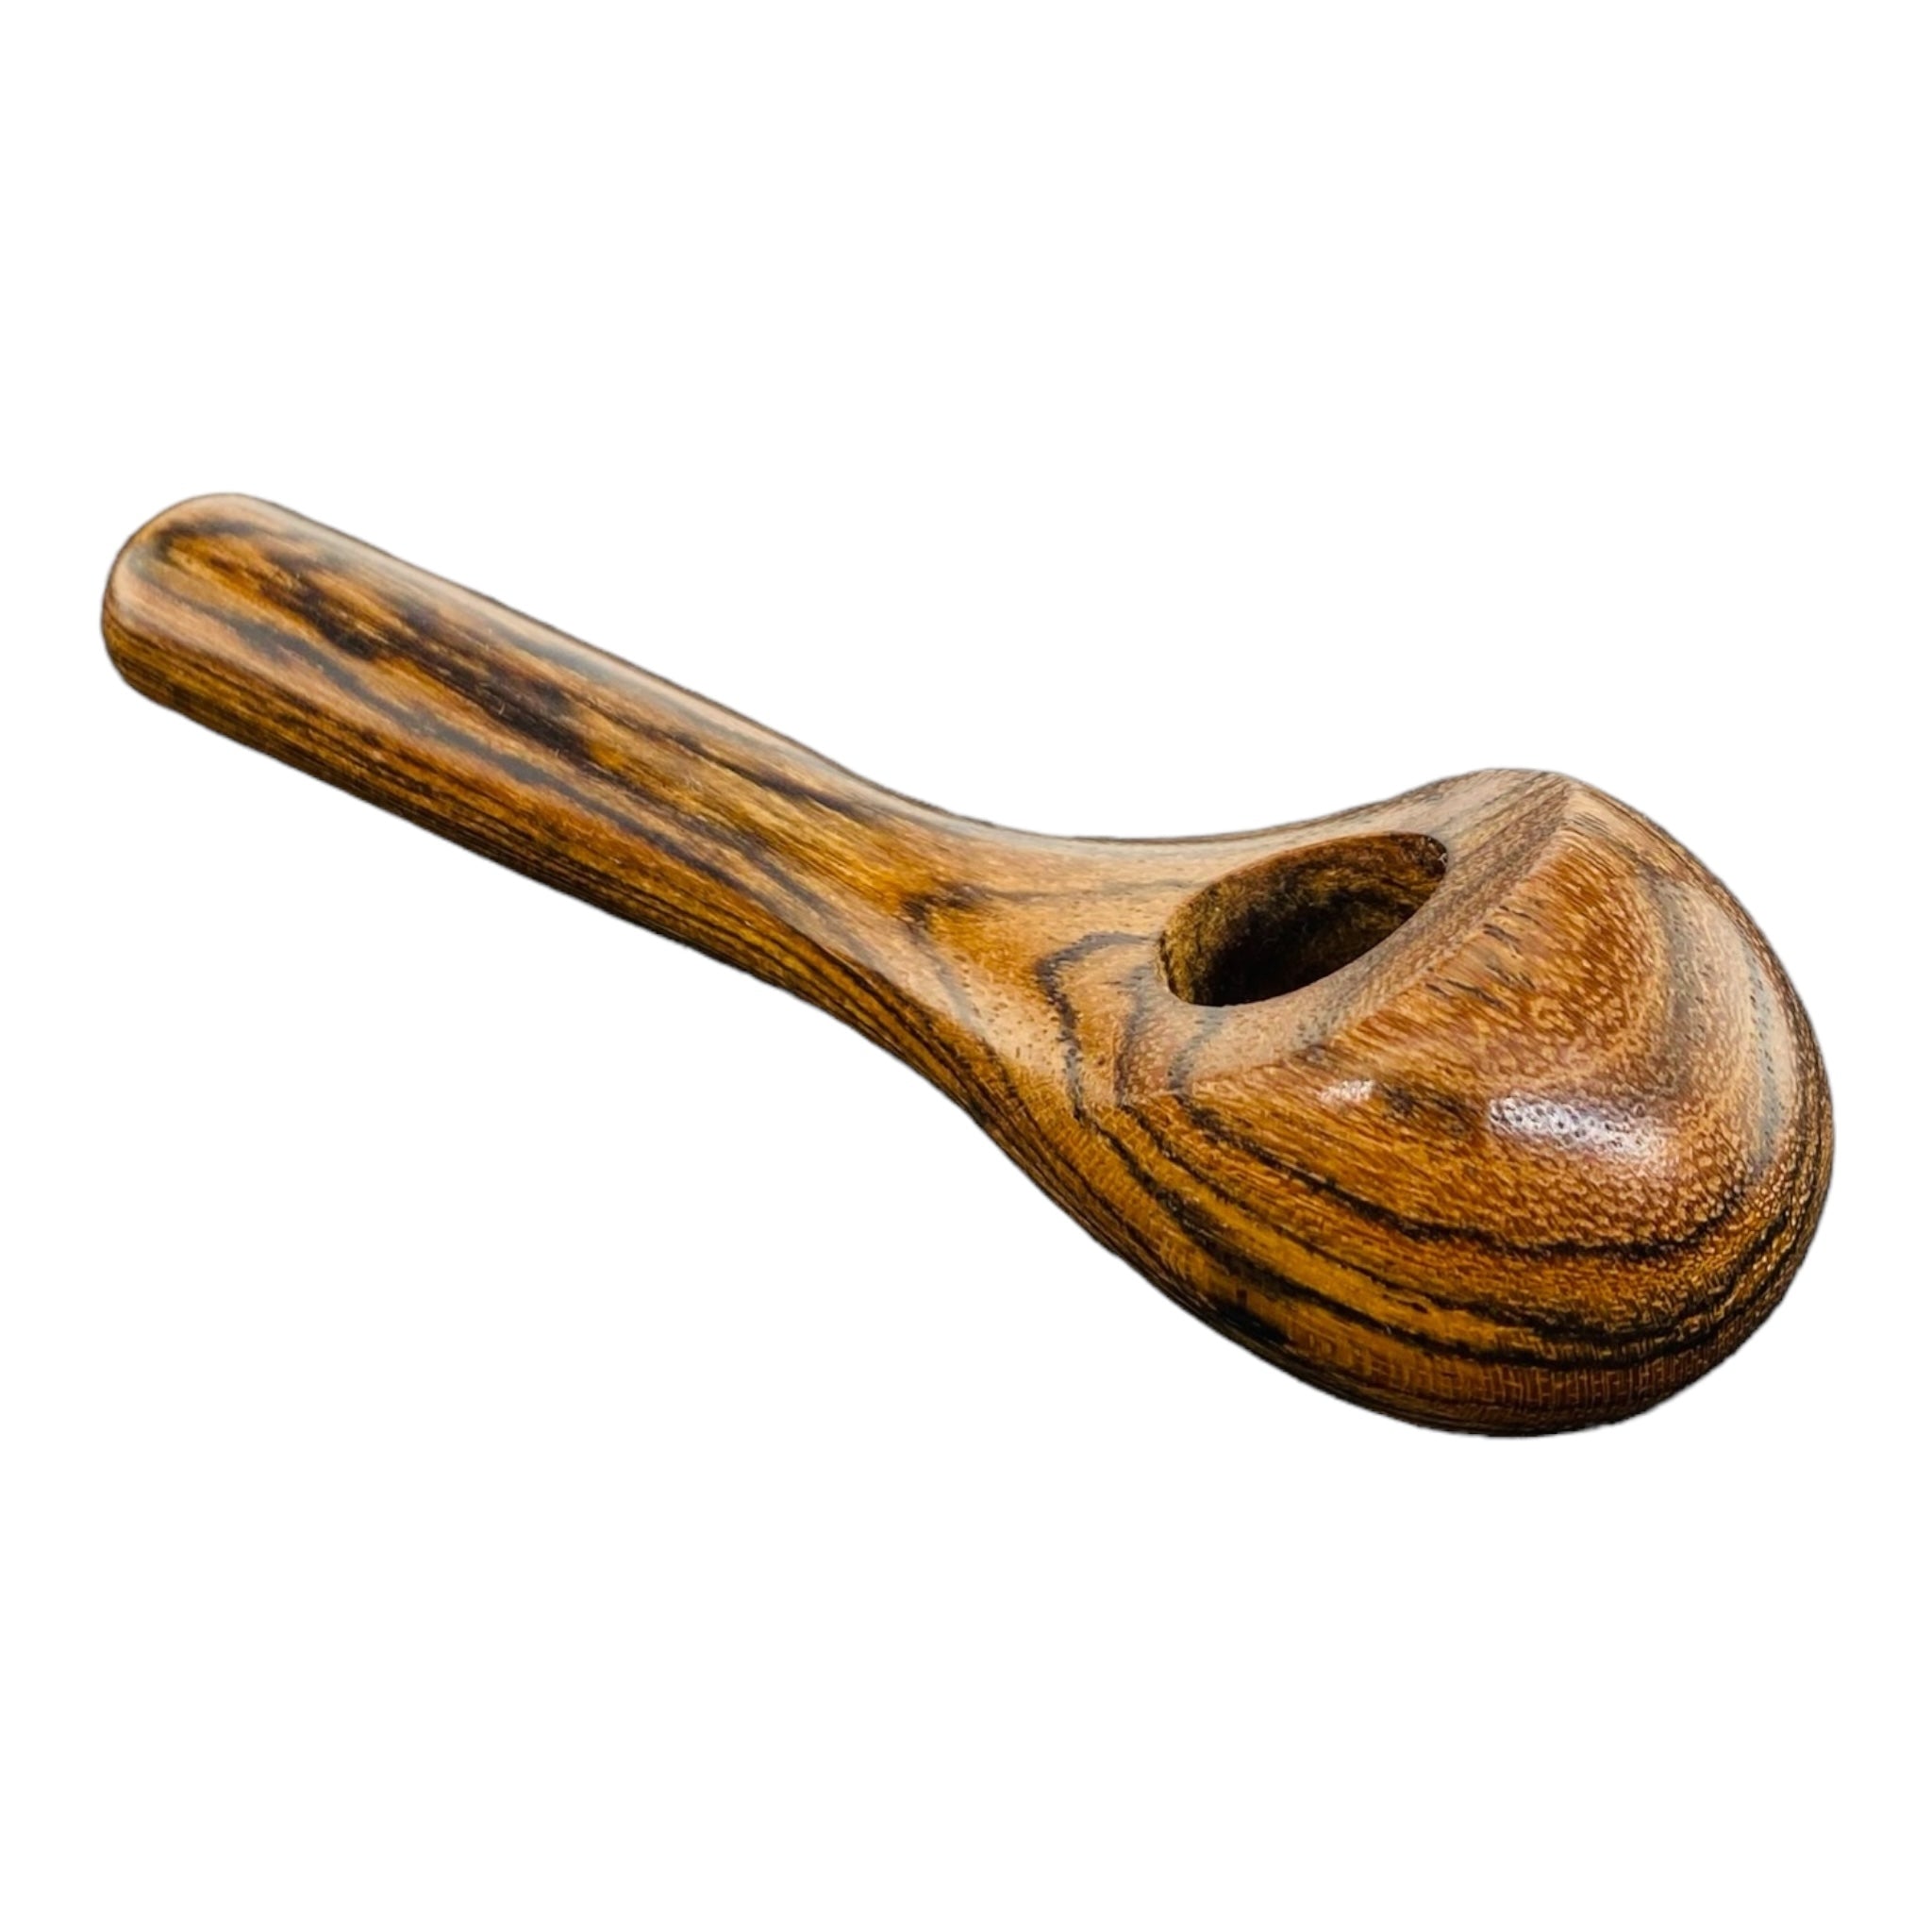 Wood Hand Pipe - Simple Spoon Shape Wood Hand Pipe